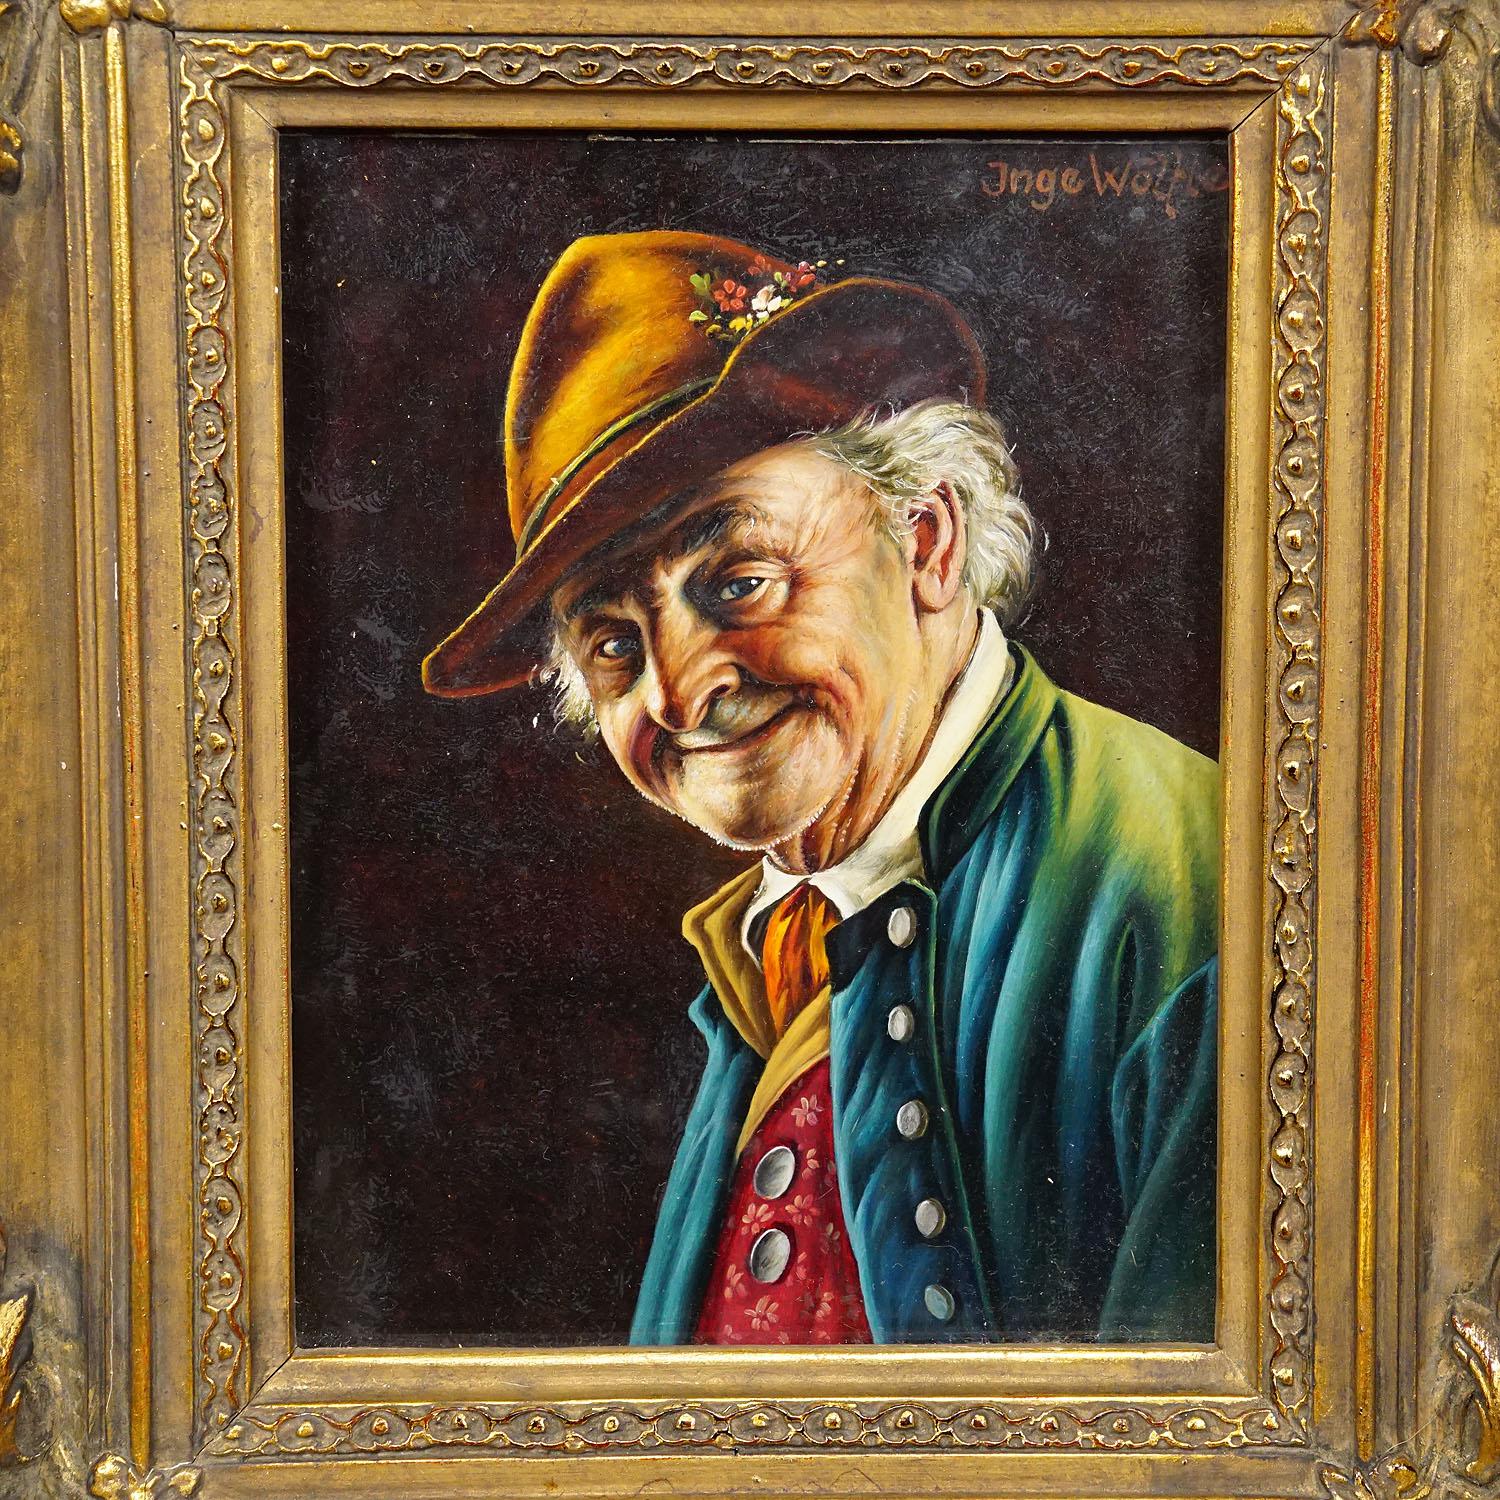 German Inge Woelfle - Portrait of a Bavarian Folksy Man, Oil on Wood For Sale